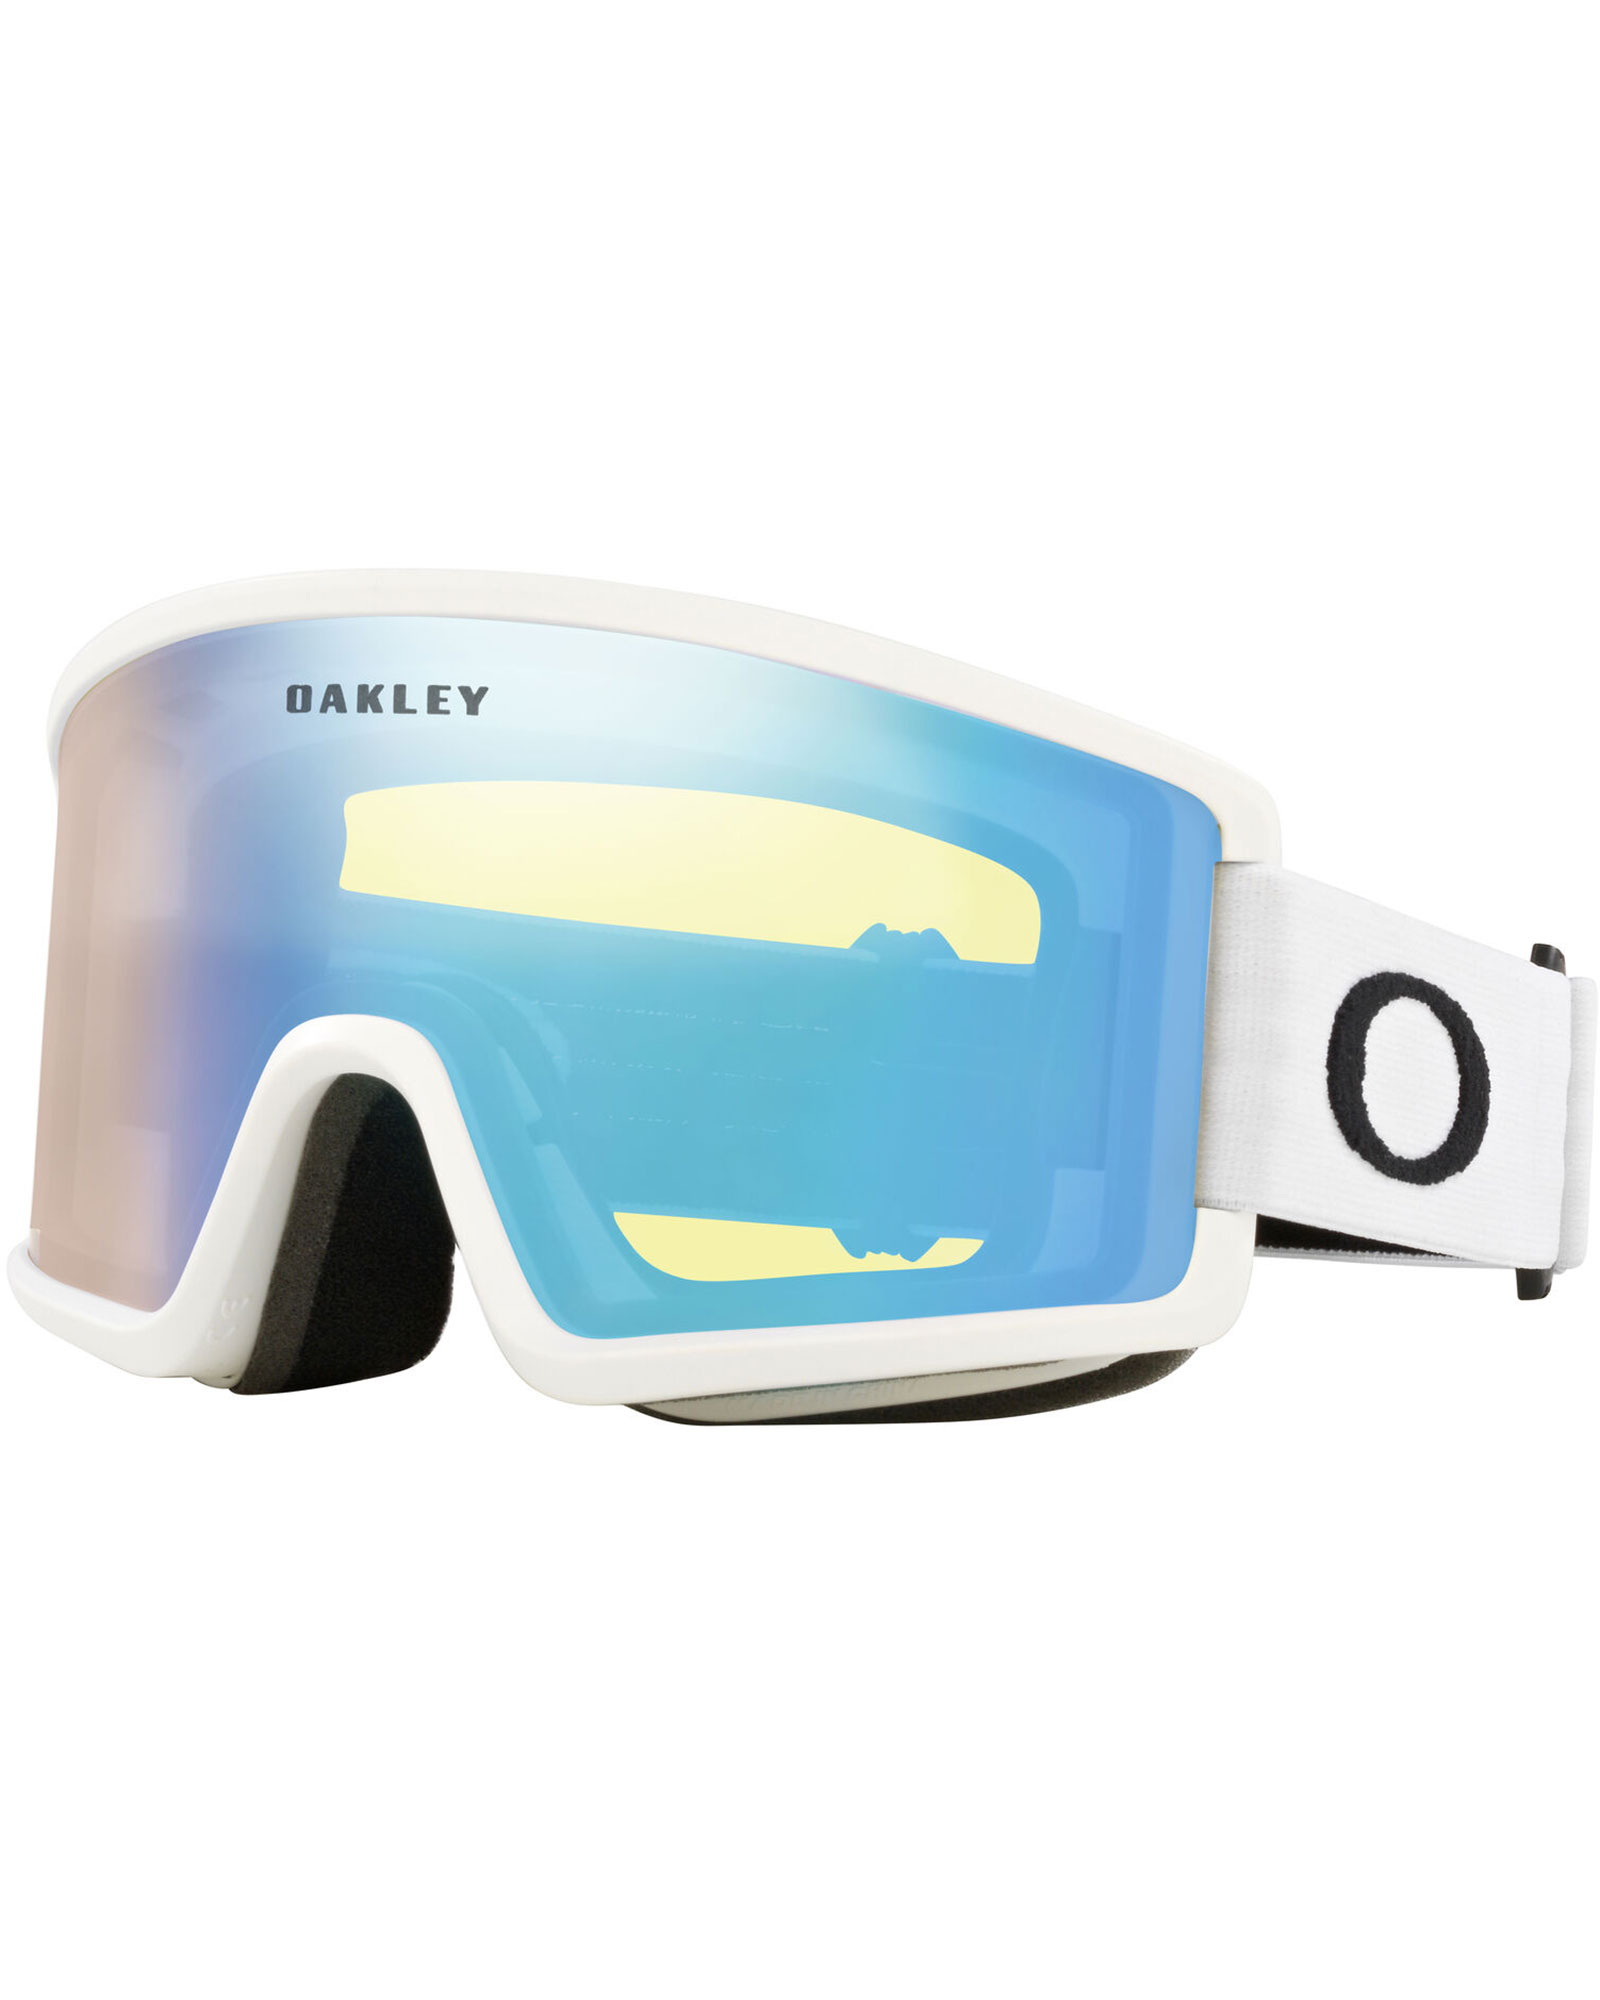 Oakley Target Line M Matte White / High Intensity Yellow Goggles - Matte White